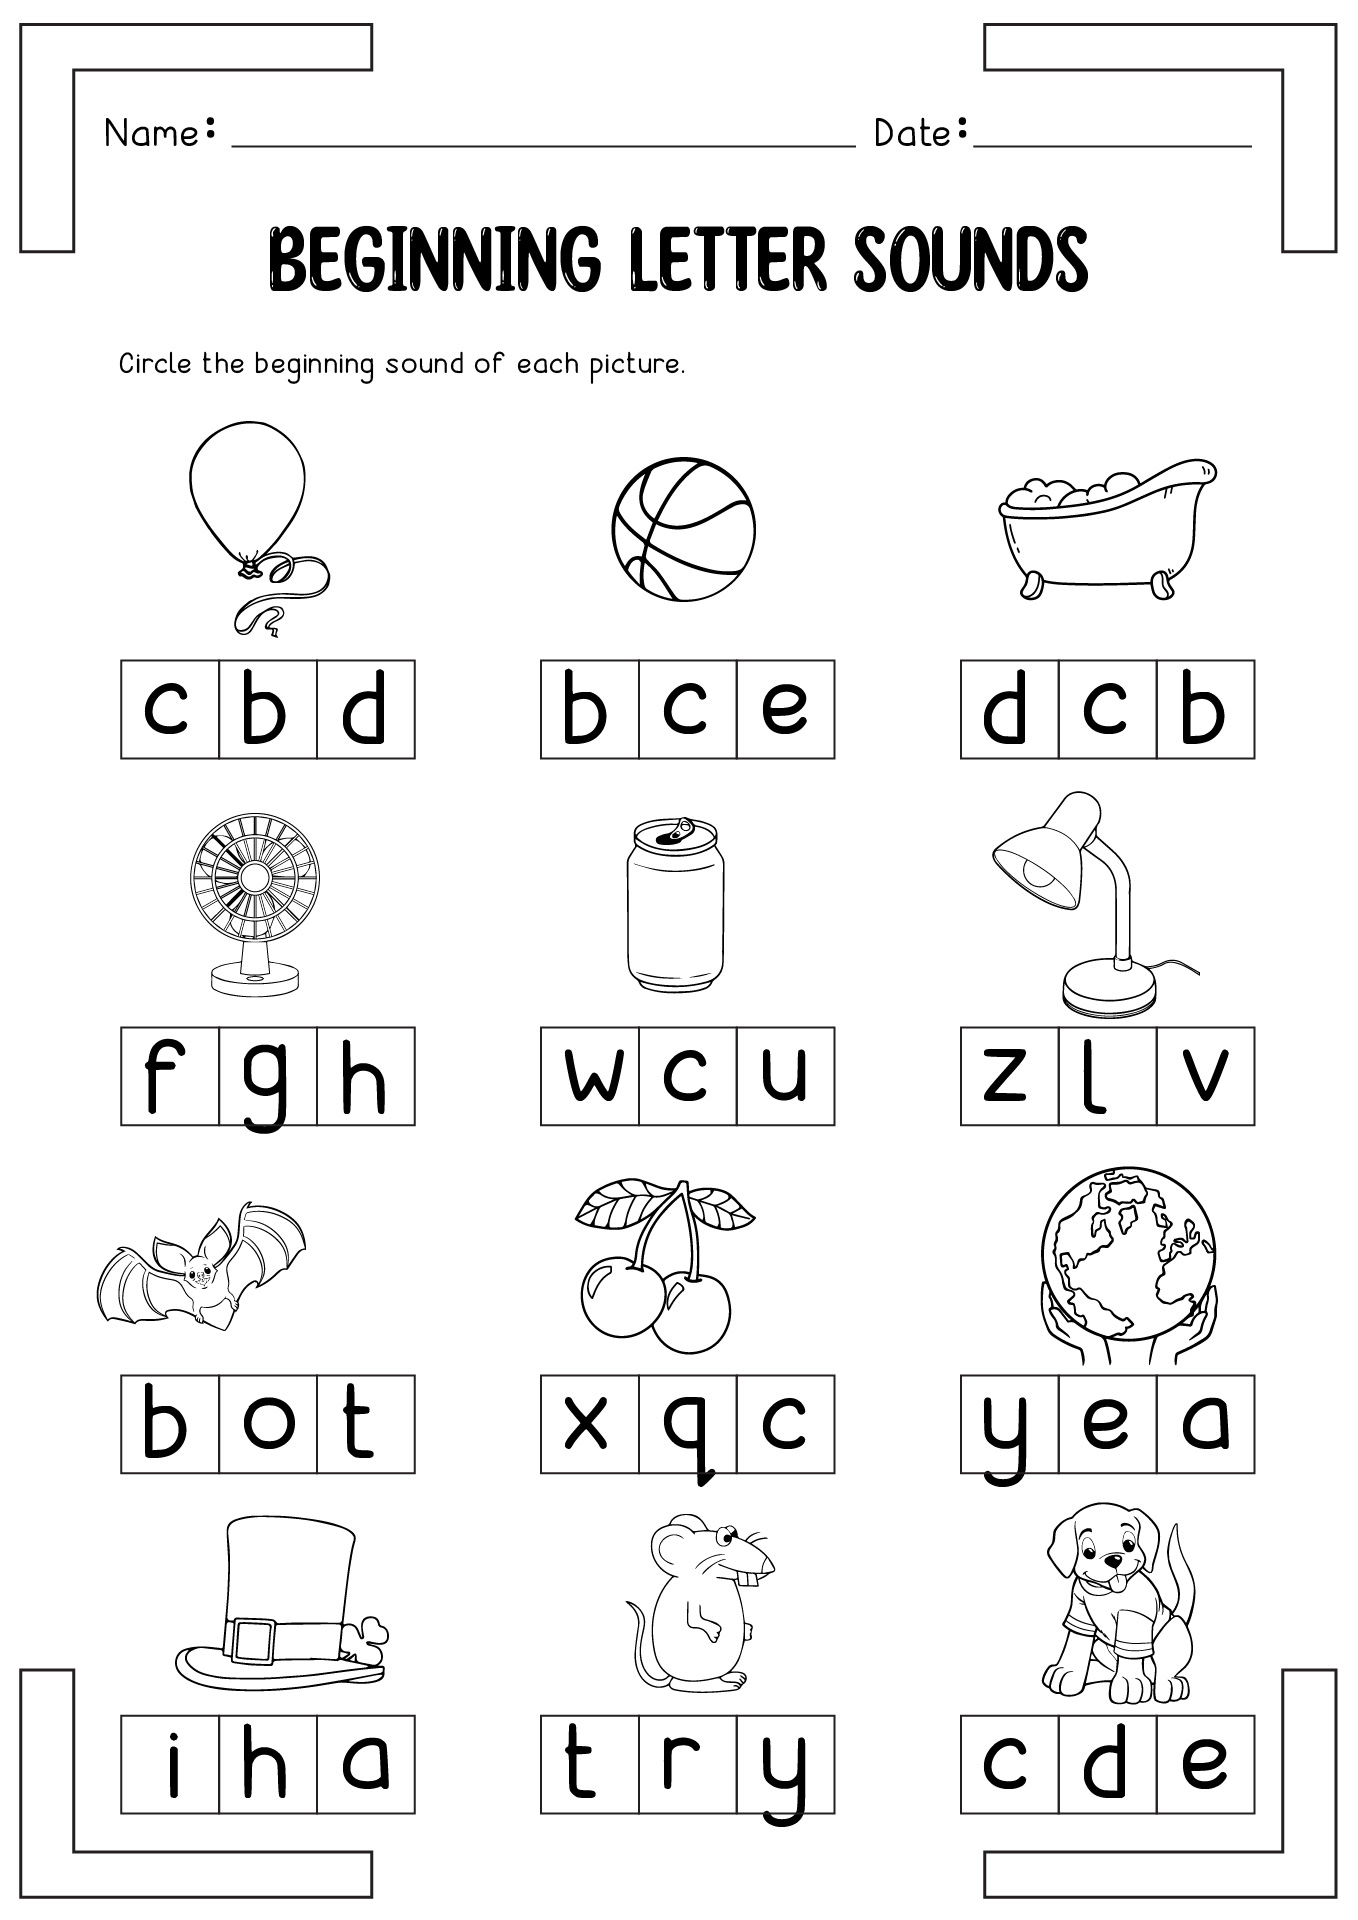 18 Best Images of Kindergarten Cut And Paste Worksheets ...